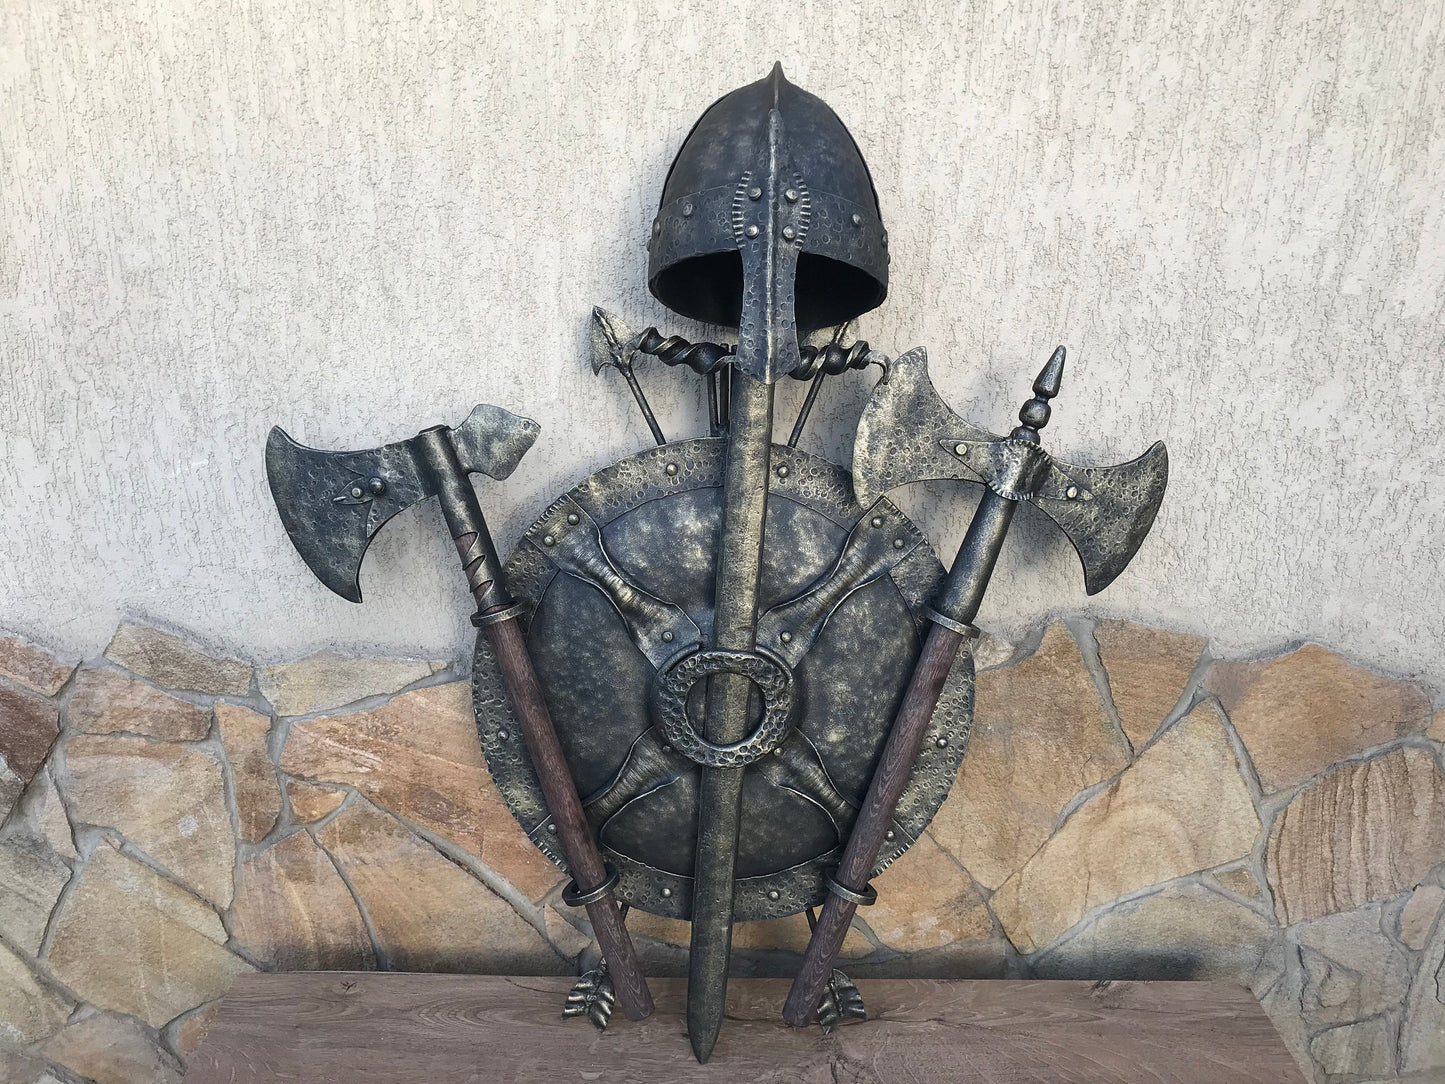 Viking sword, sword, costume weapon, costume armor, viking axe,medieval sword, axe,knight sword,medieval armor,viking artifact,warrior sword